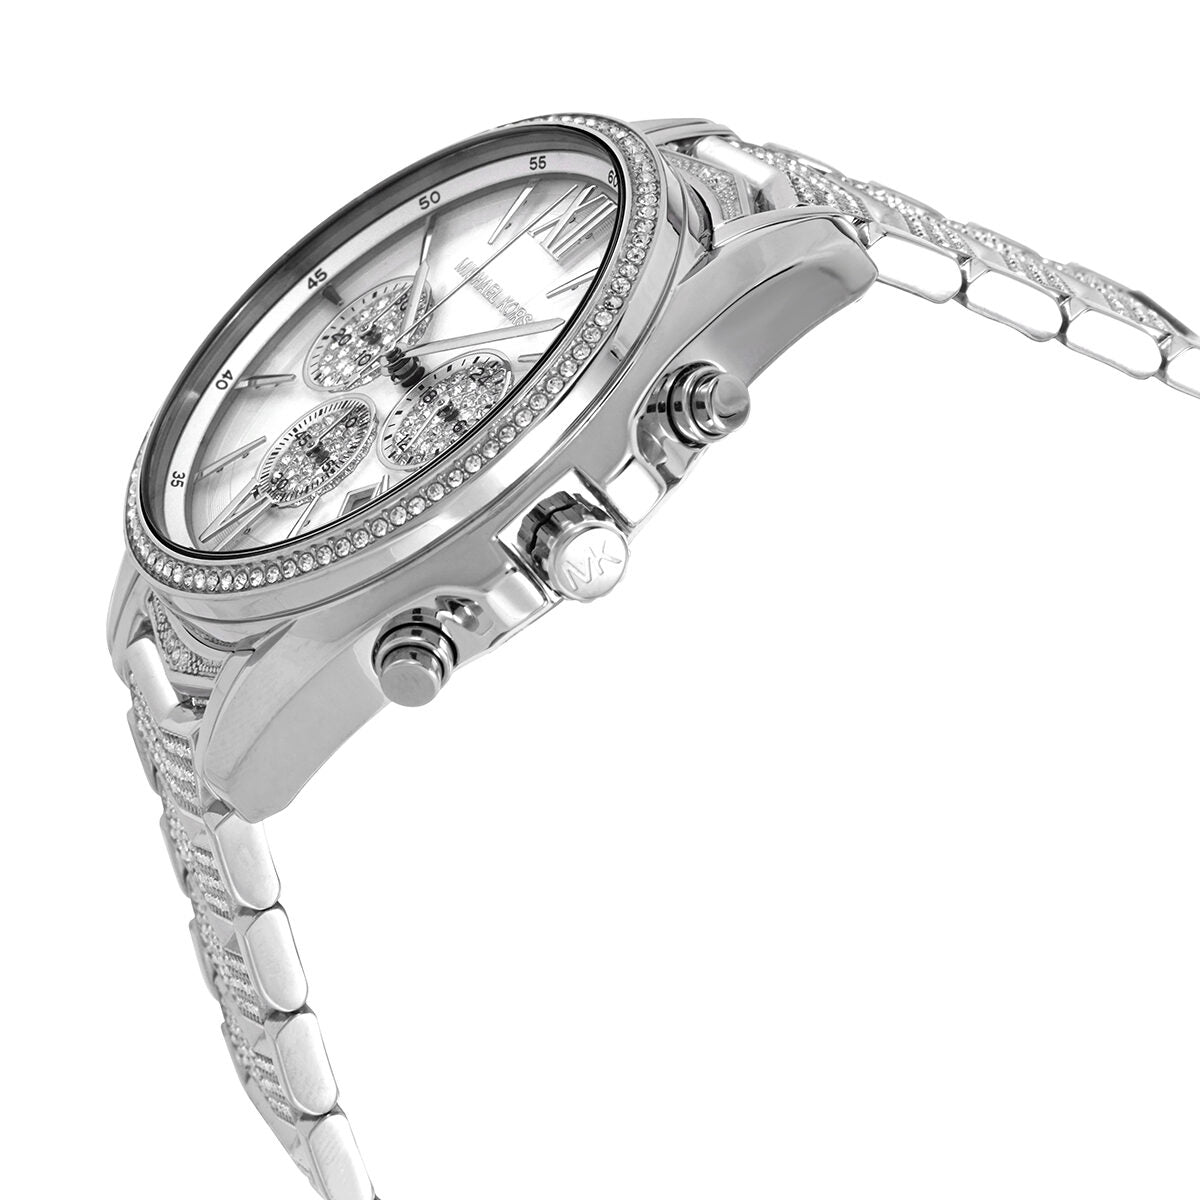 Michael Kors Whitney Chronograph Quartz Crystal Silver Dial Ladies Watch MK6728 - BigDaddy Watches #2